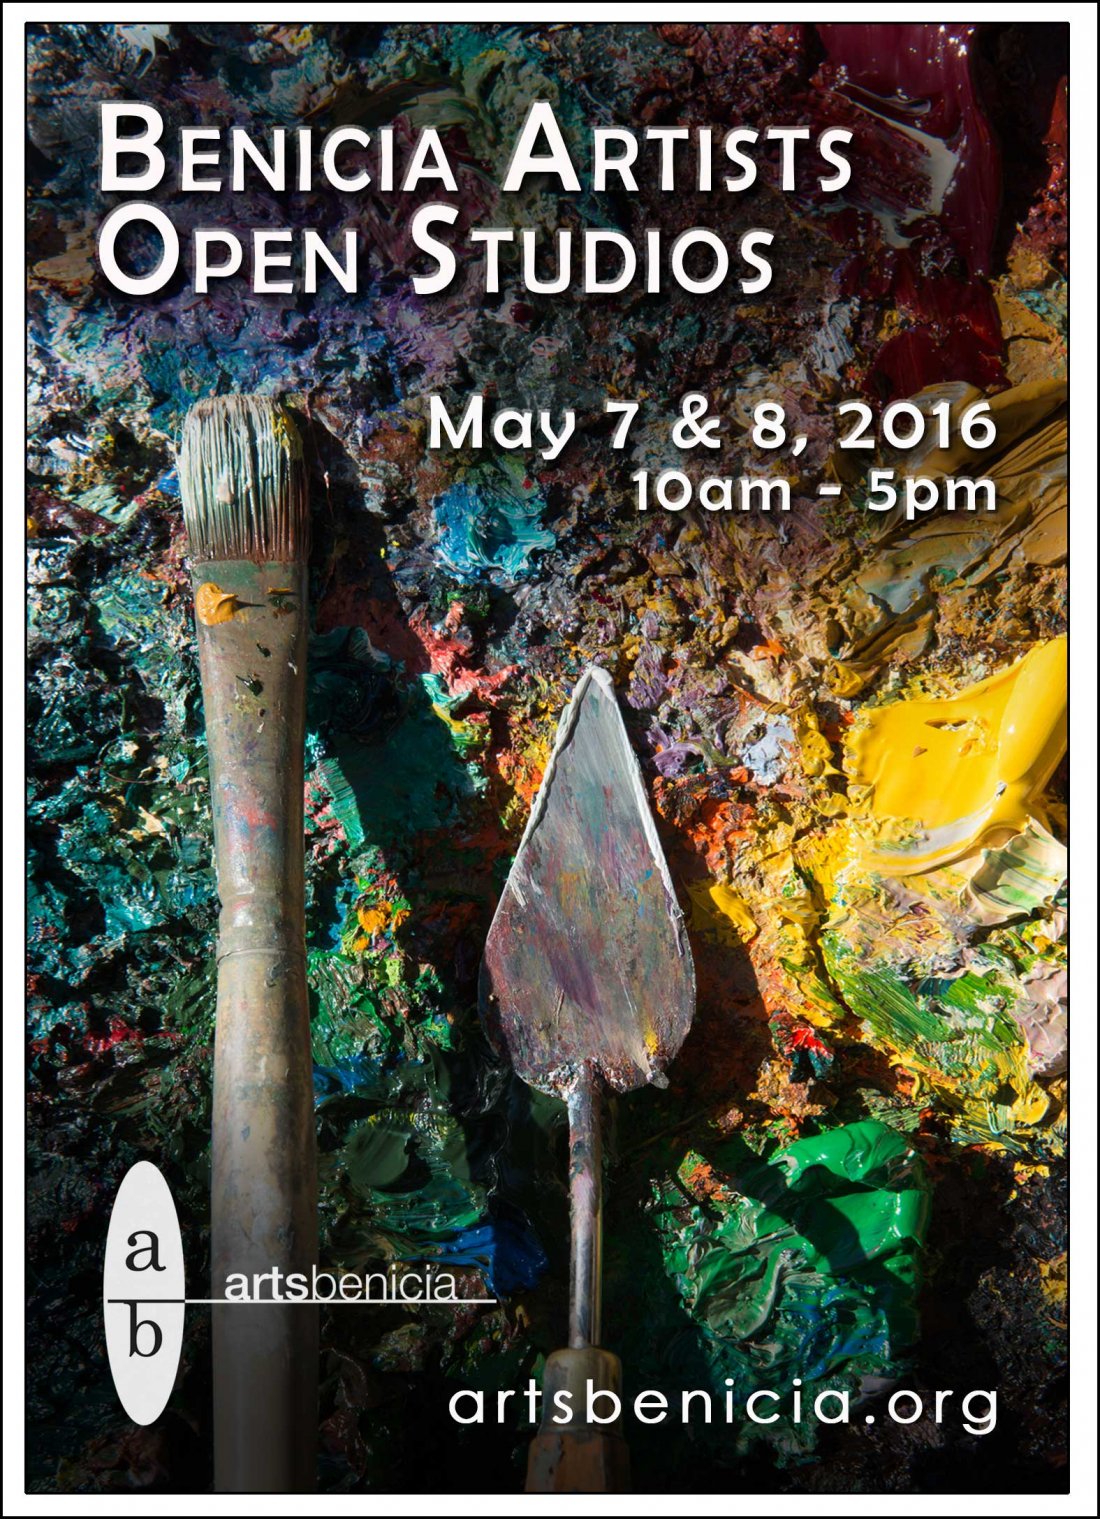 Benicia Artists Open Studios 2016